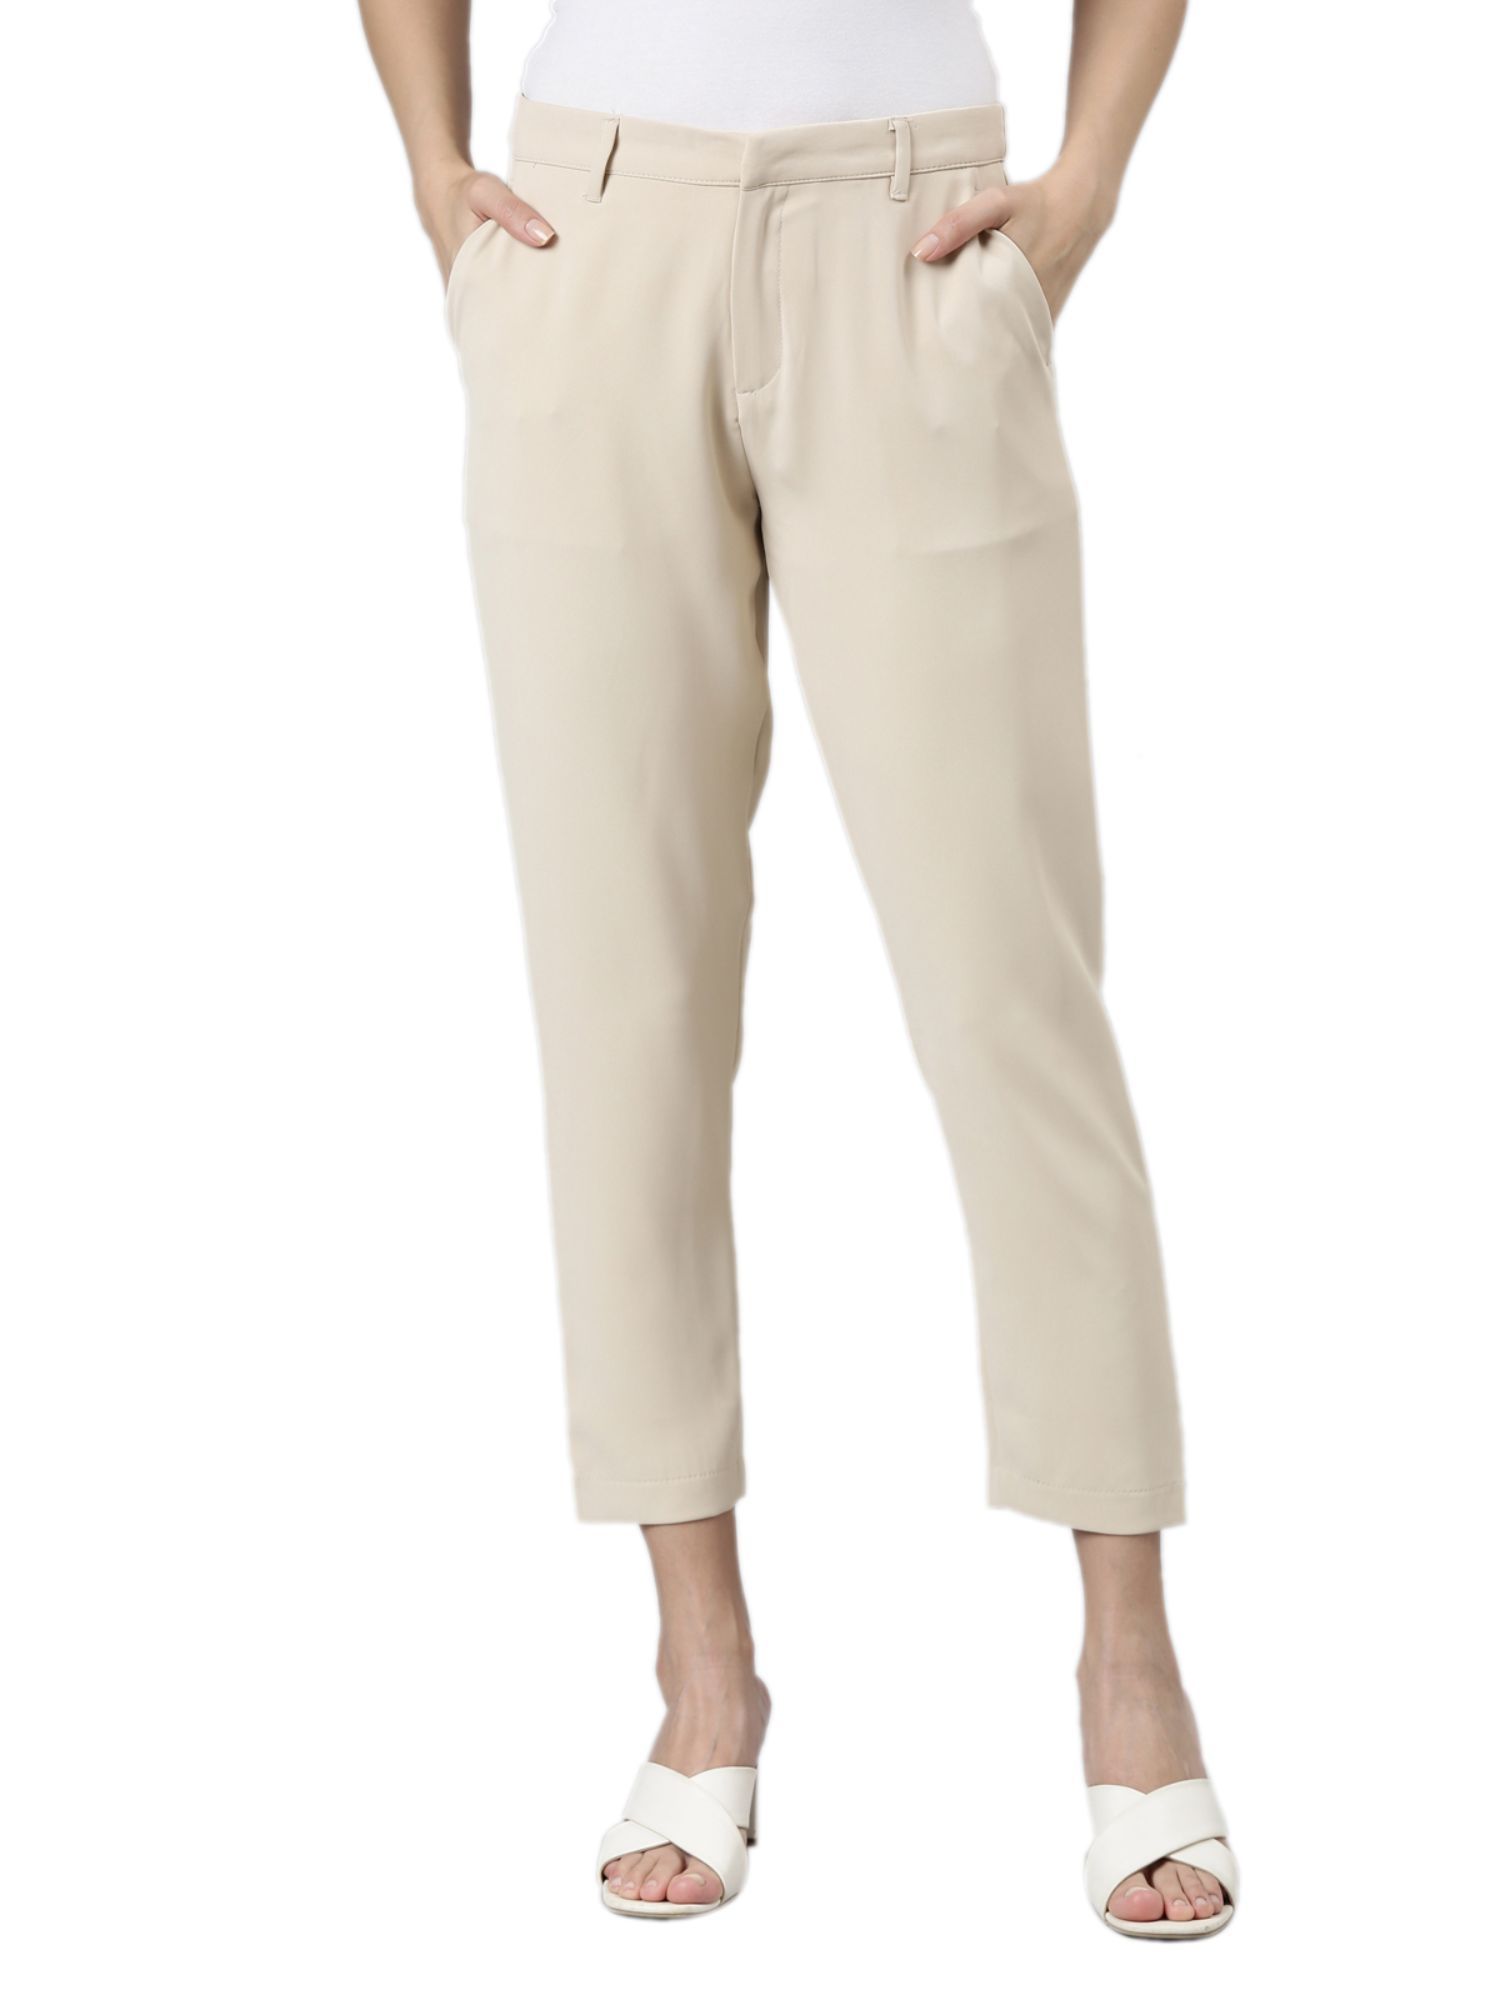 Fashion (Beige Pants)Plus Size 3XL Summer Hot Cotton Linen Women Wide Legs  Pants Solid Casual High Waist Button Trousers Female Loose Pants WEF @ Best  Price Online | Jumia Egypt